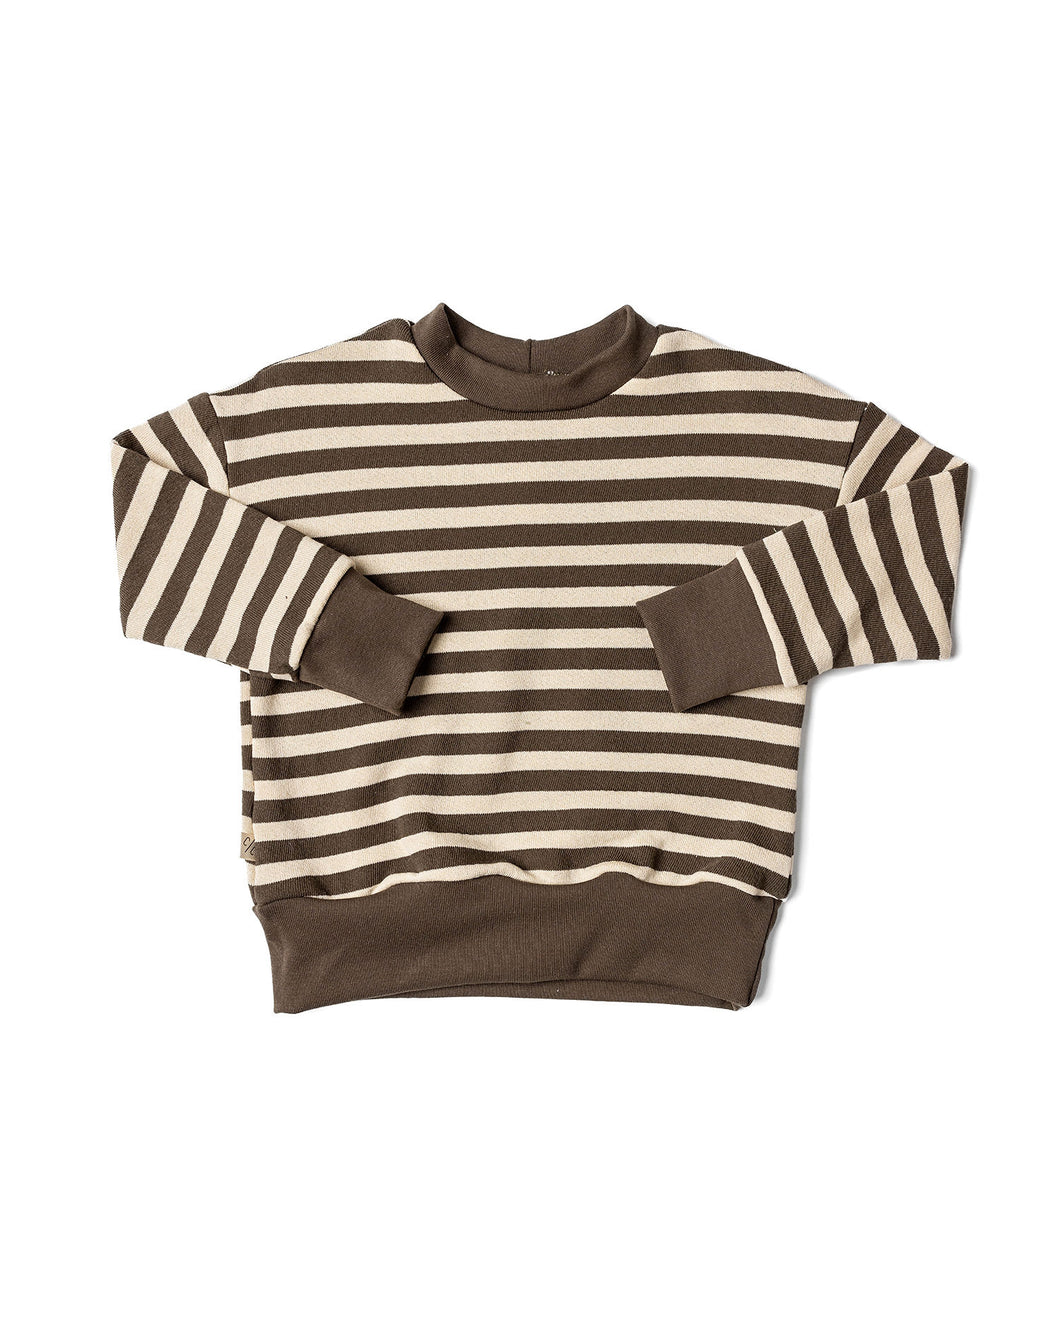 boxy sweatshirt - dark fatigue and dark fatigue stripe